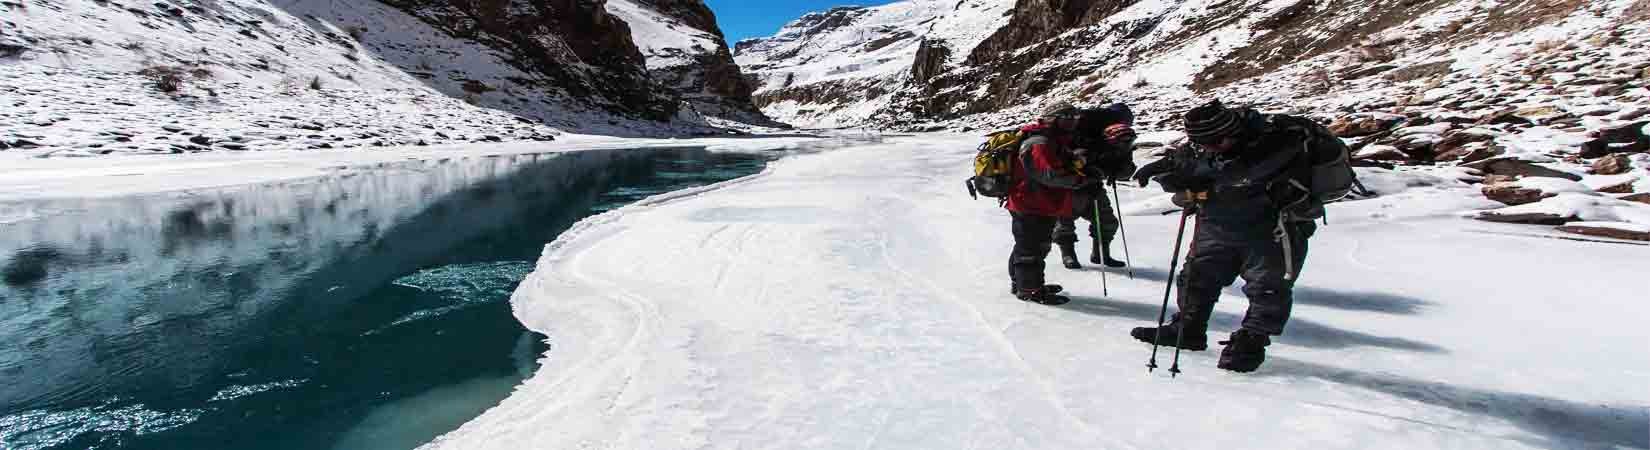 Zanskar River; Frozen River Trekking, India